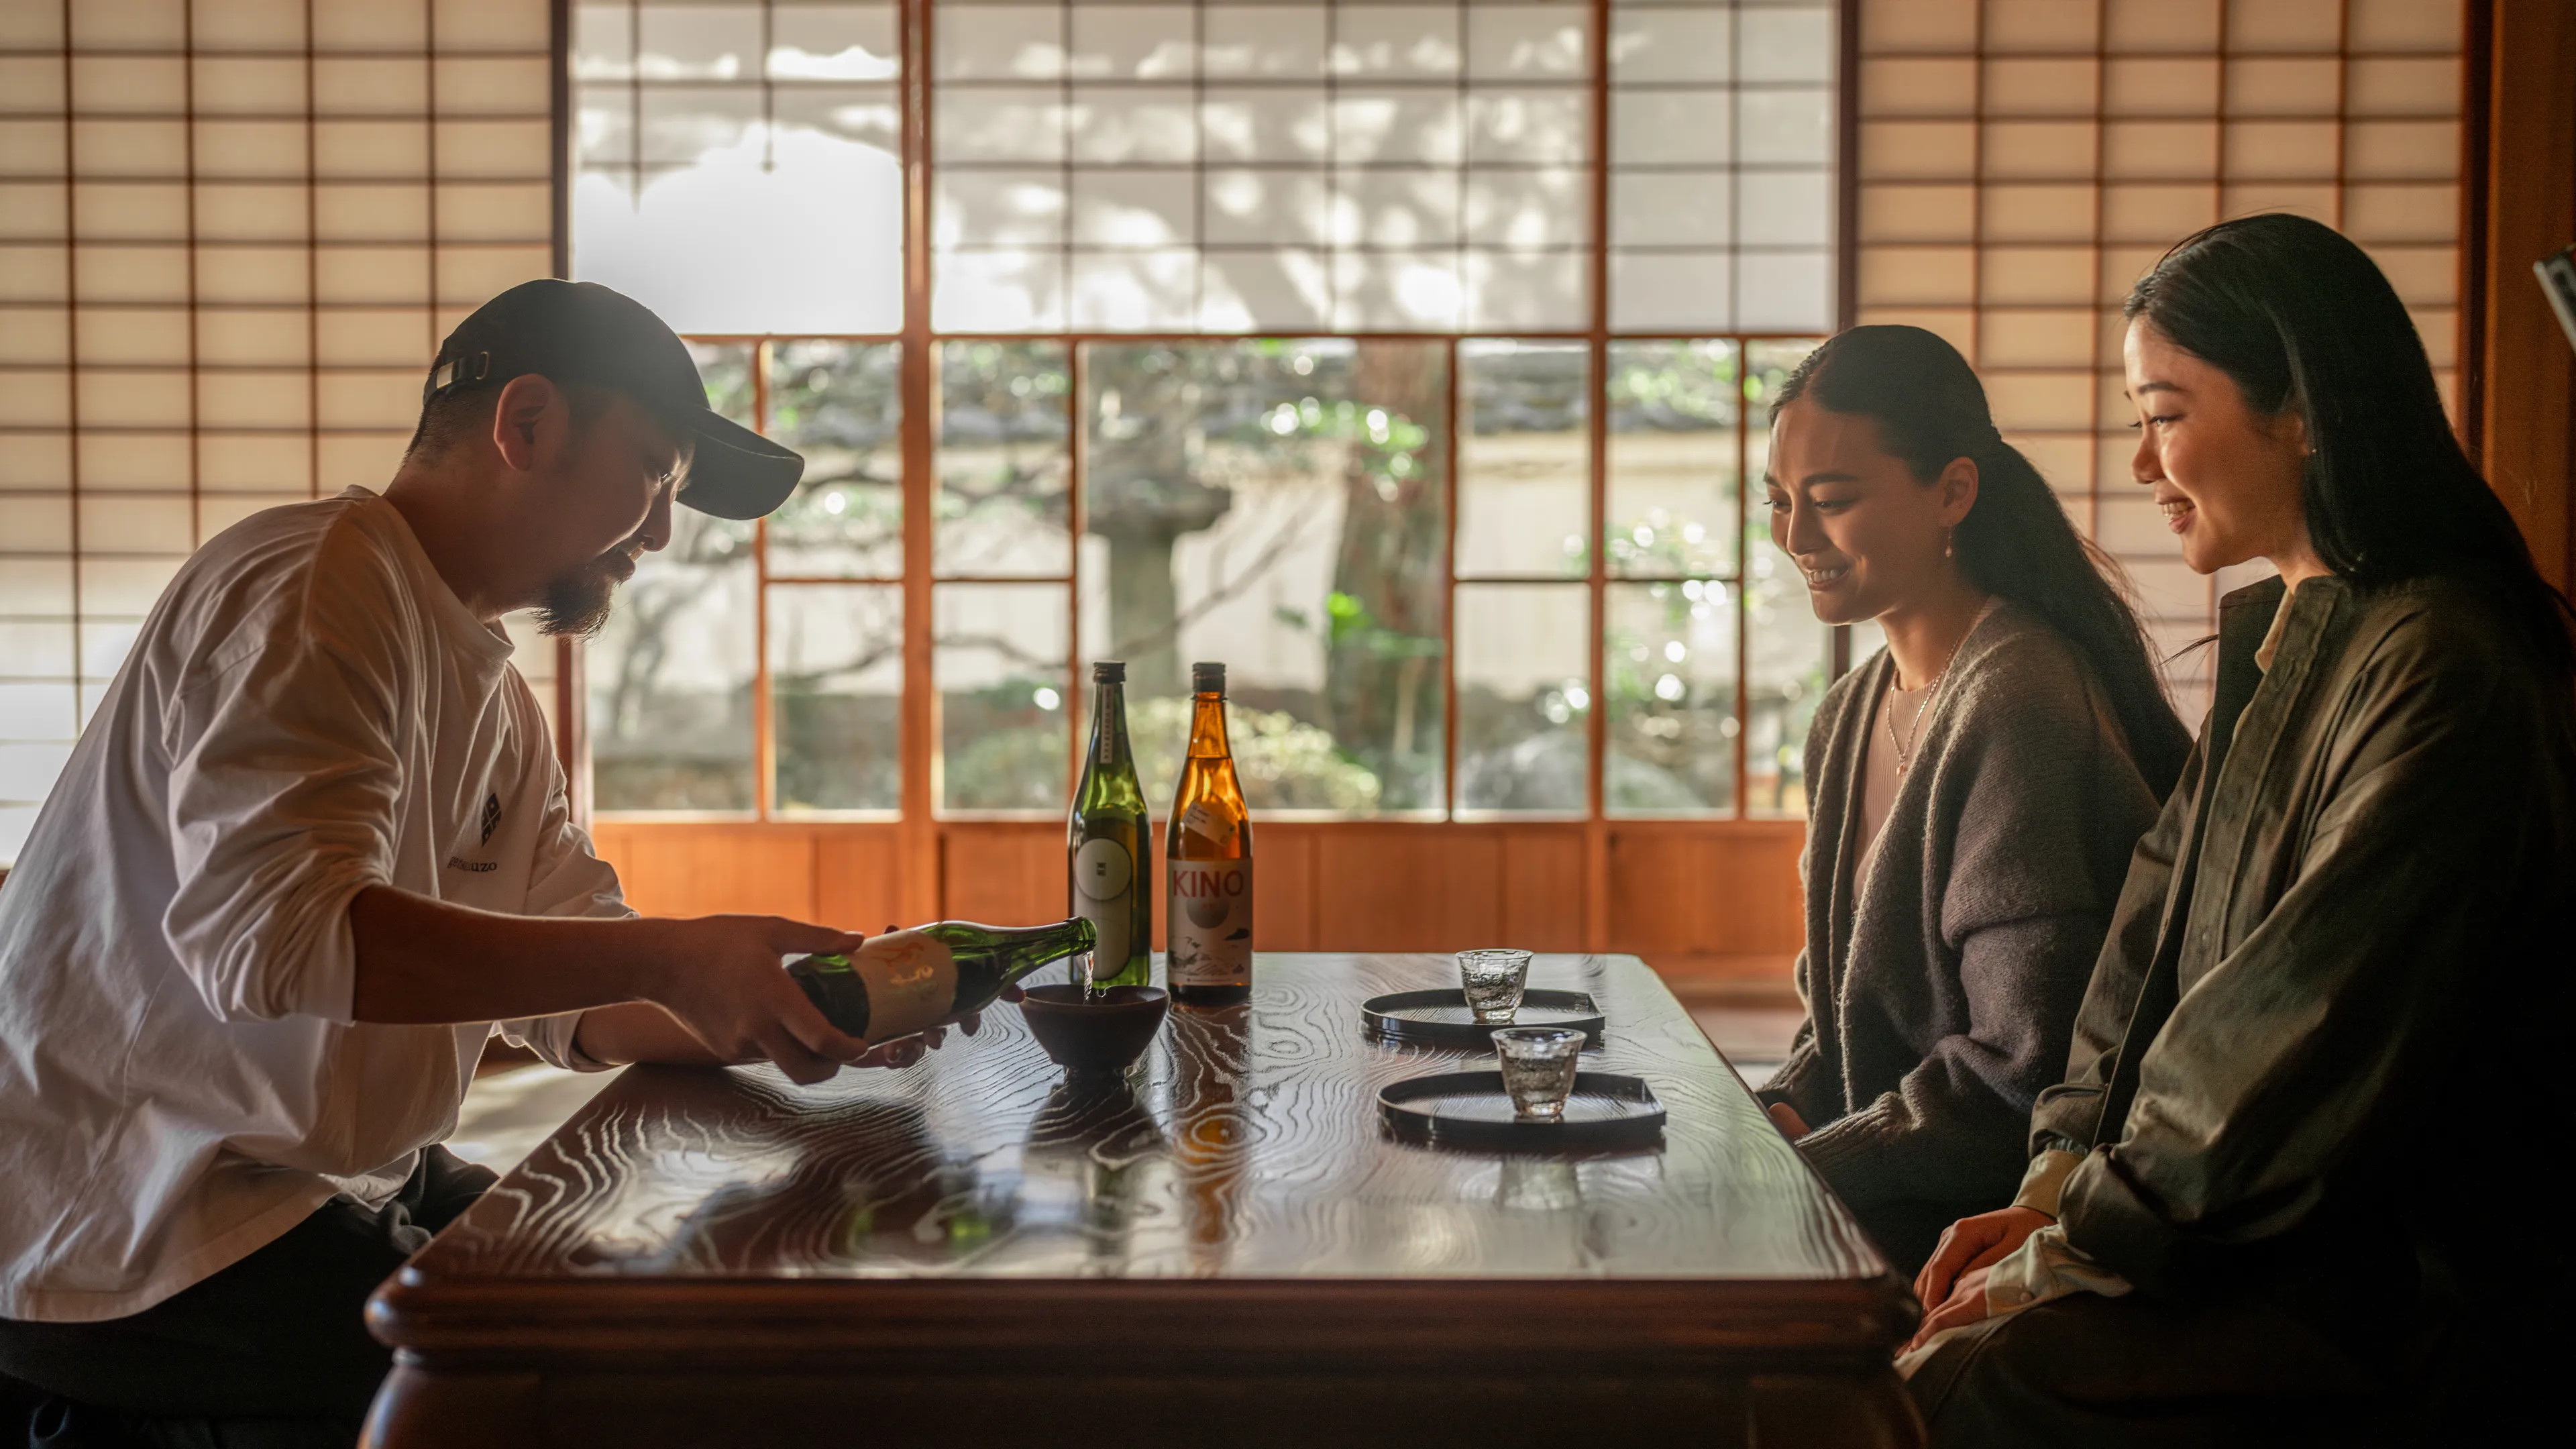 A 200-year-old Sake brewery visit and Sake pairing course at Hinakaya, a Michelin starred restaurant